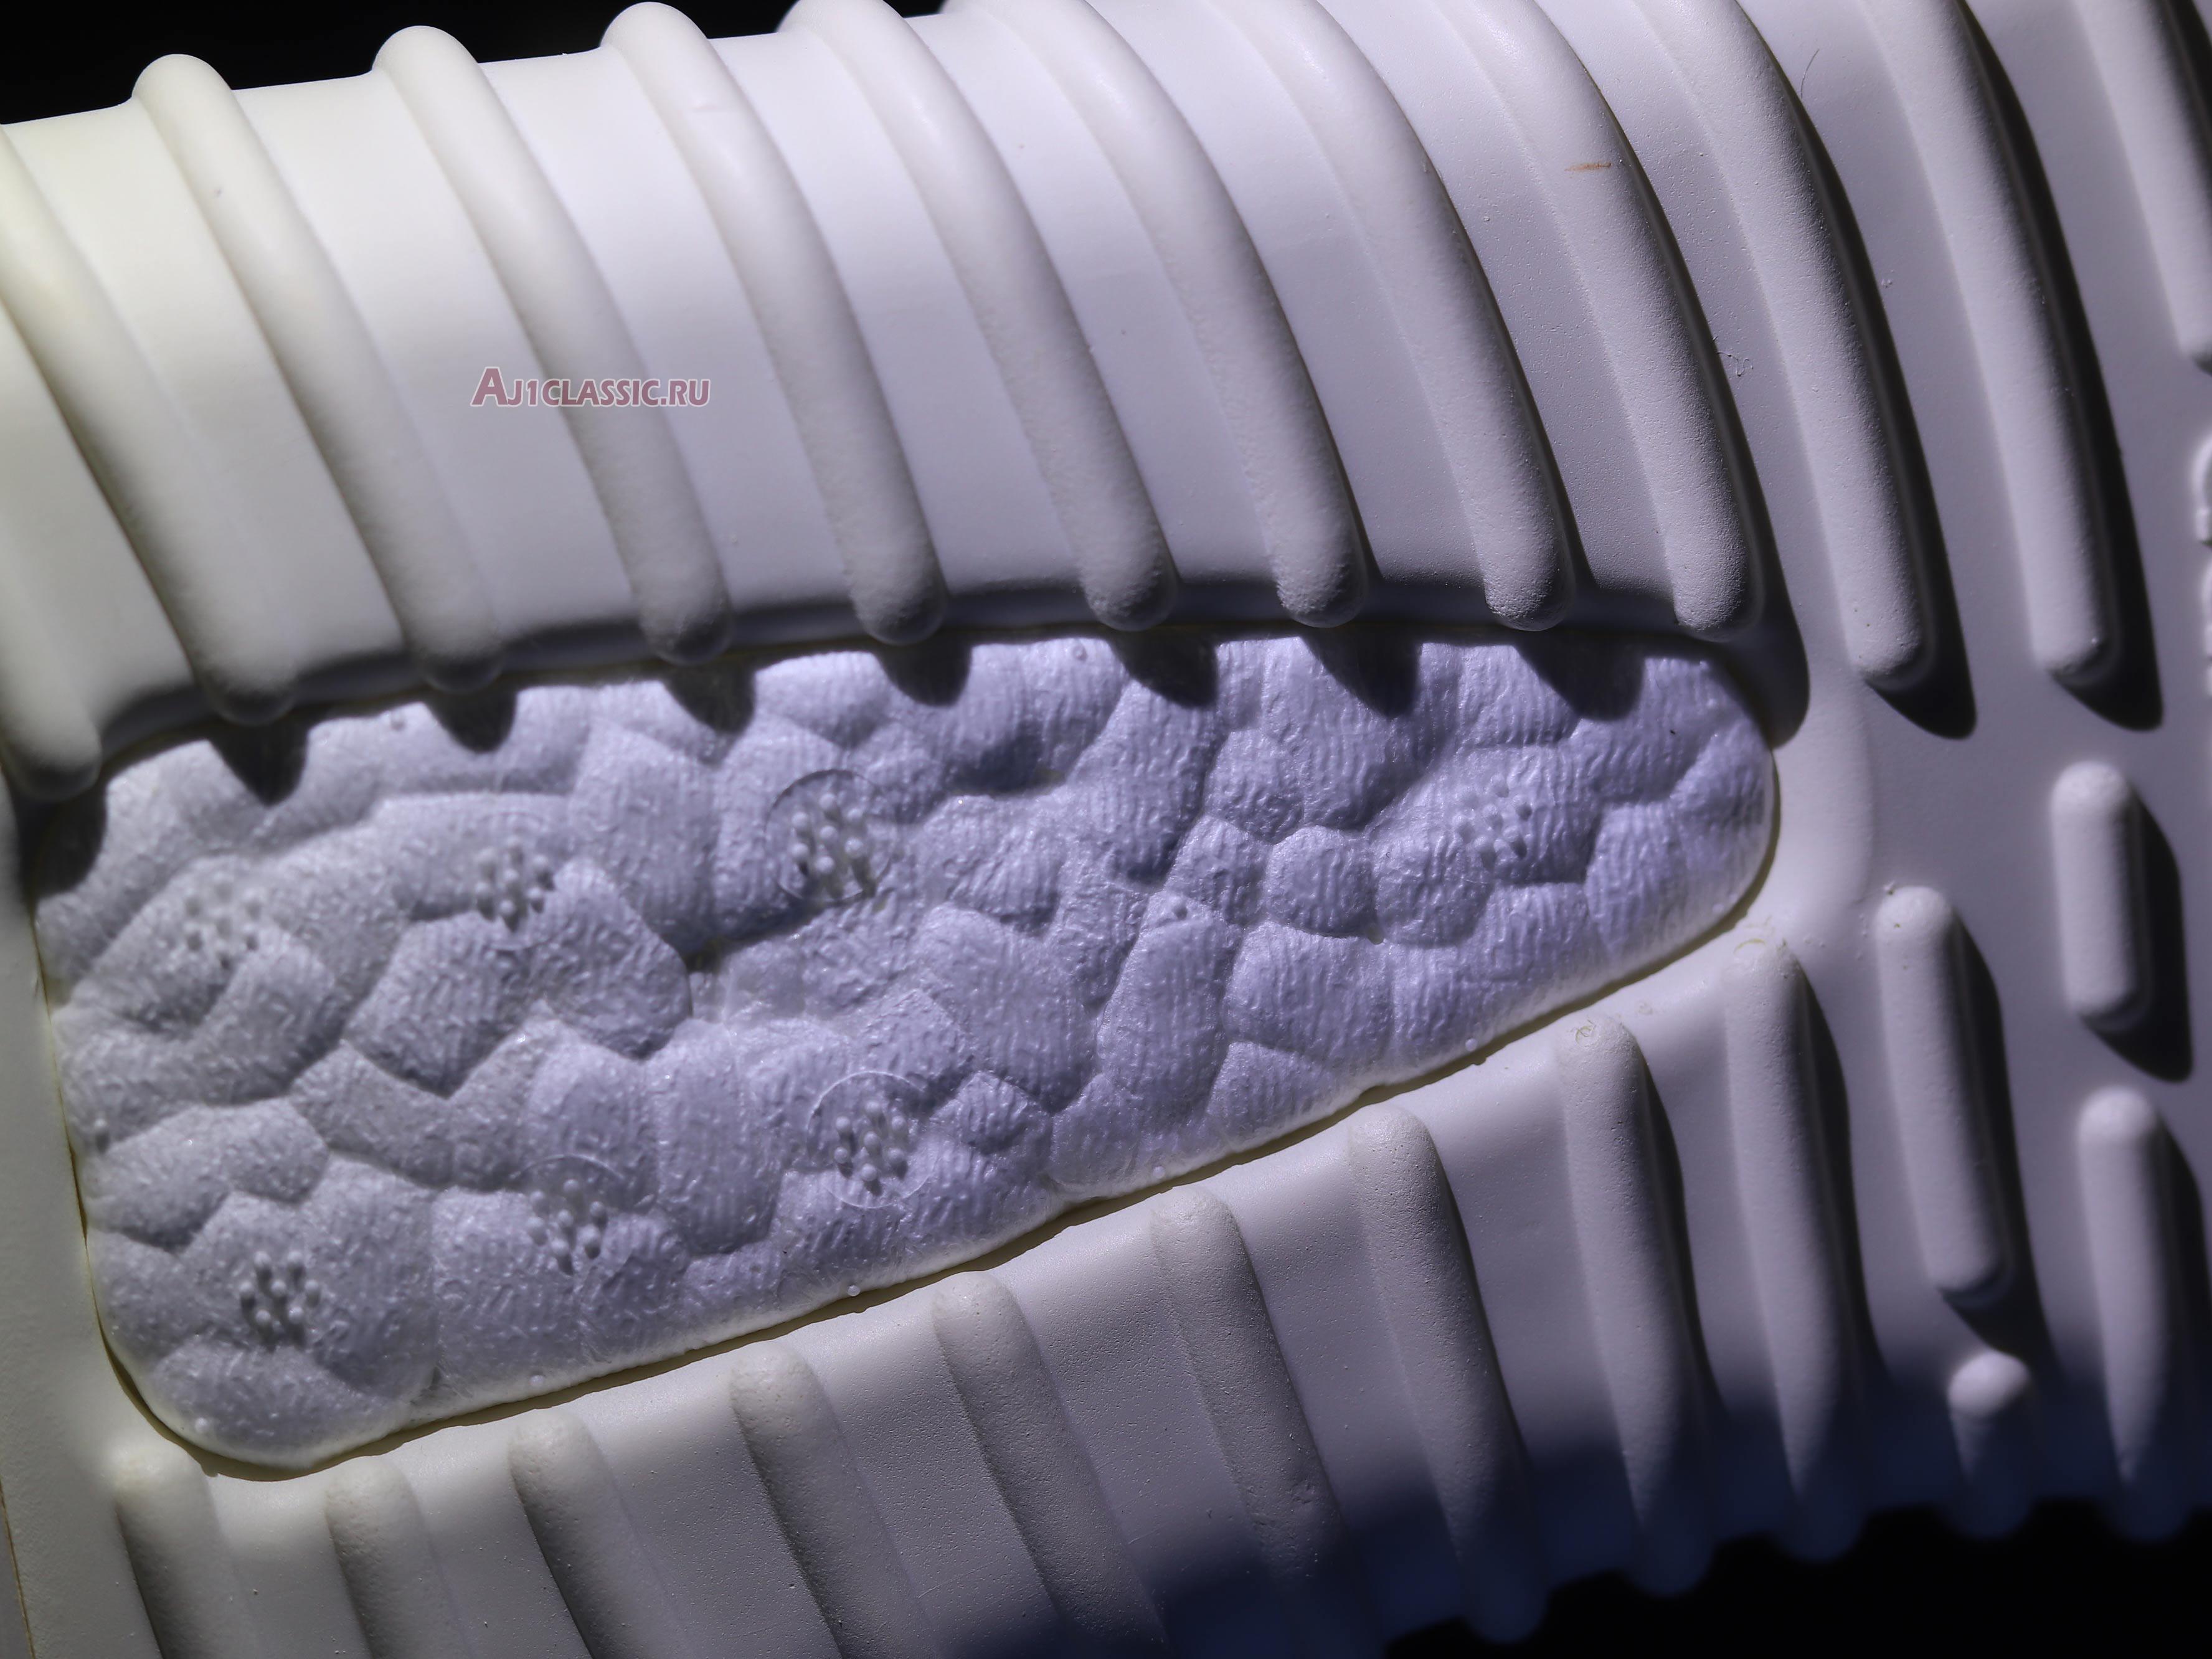 Adidas Yeezy Boost 350 "Turtle Dove" AQ4832